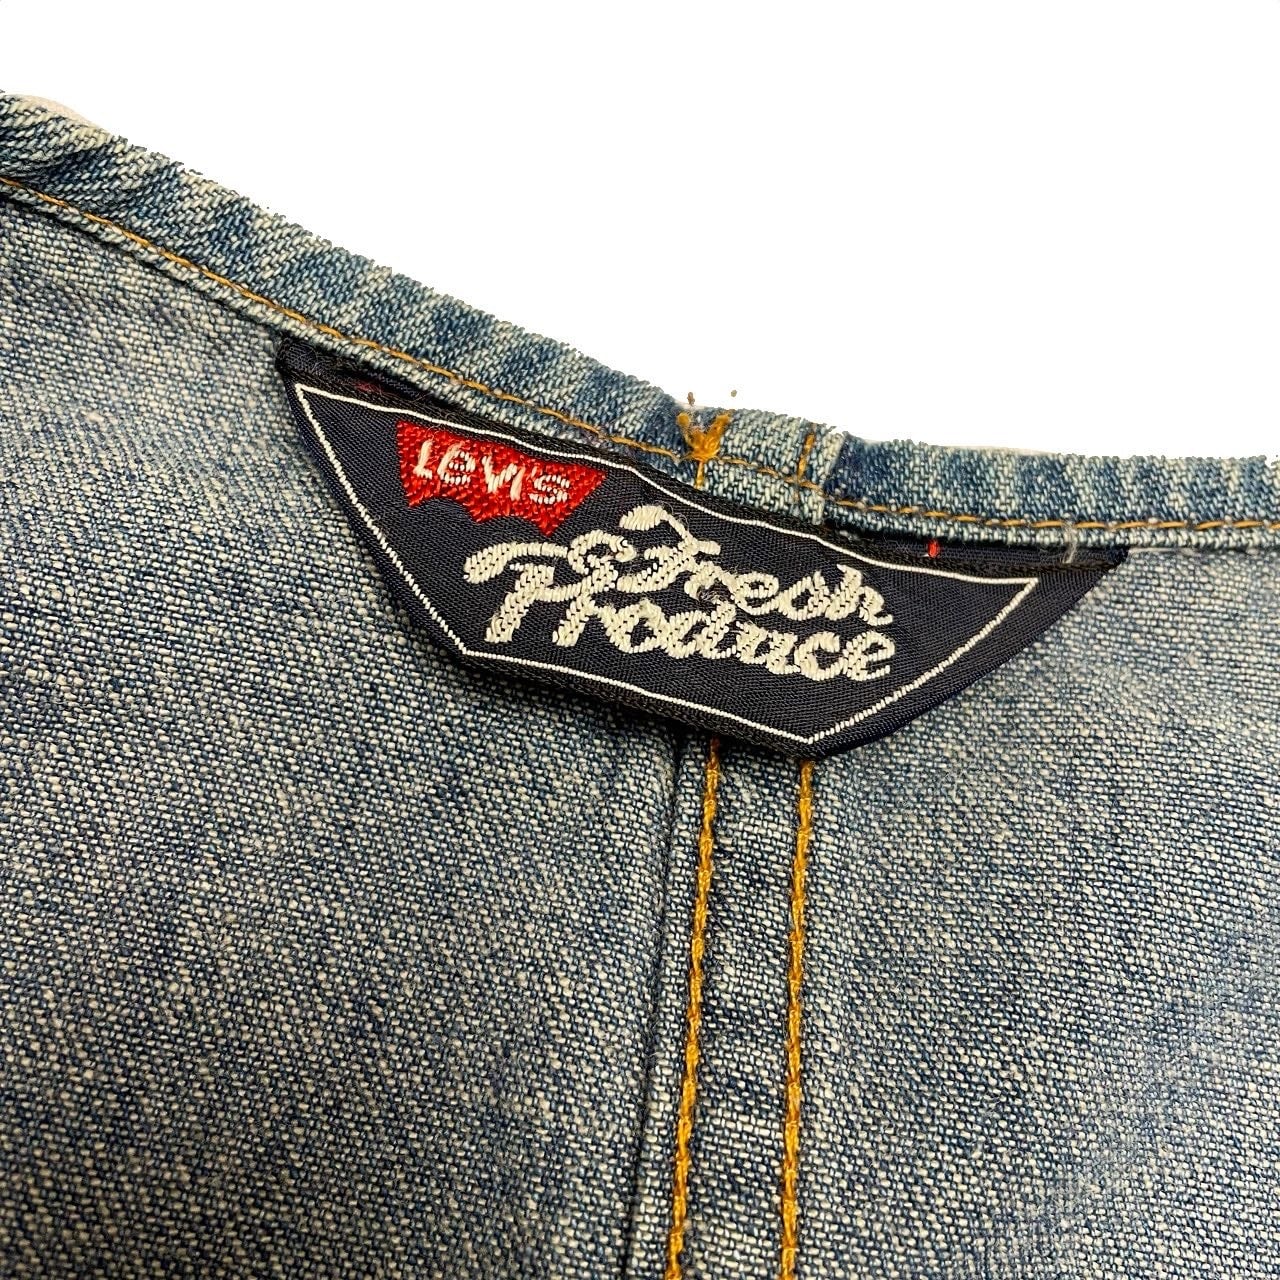 Levi's fresh produce vest 70s